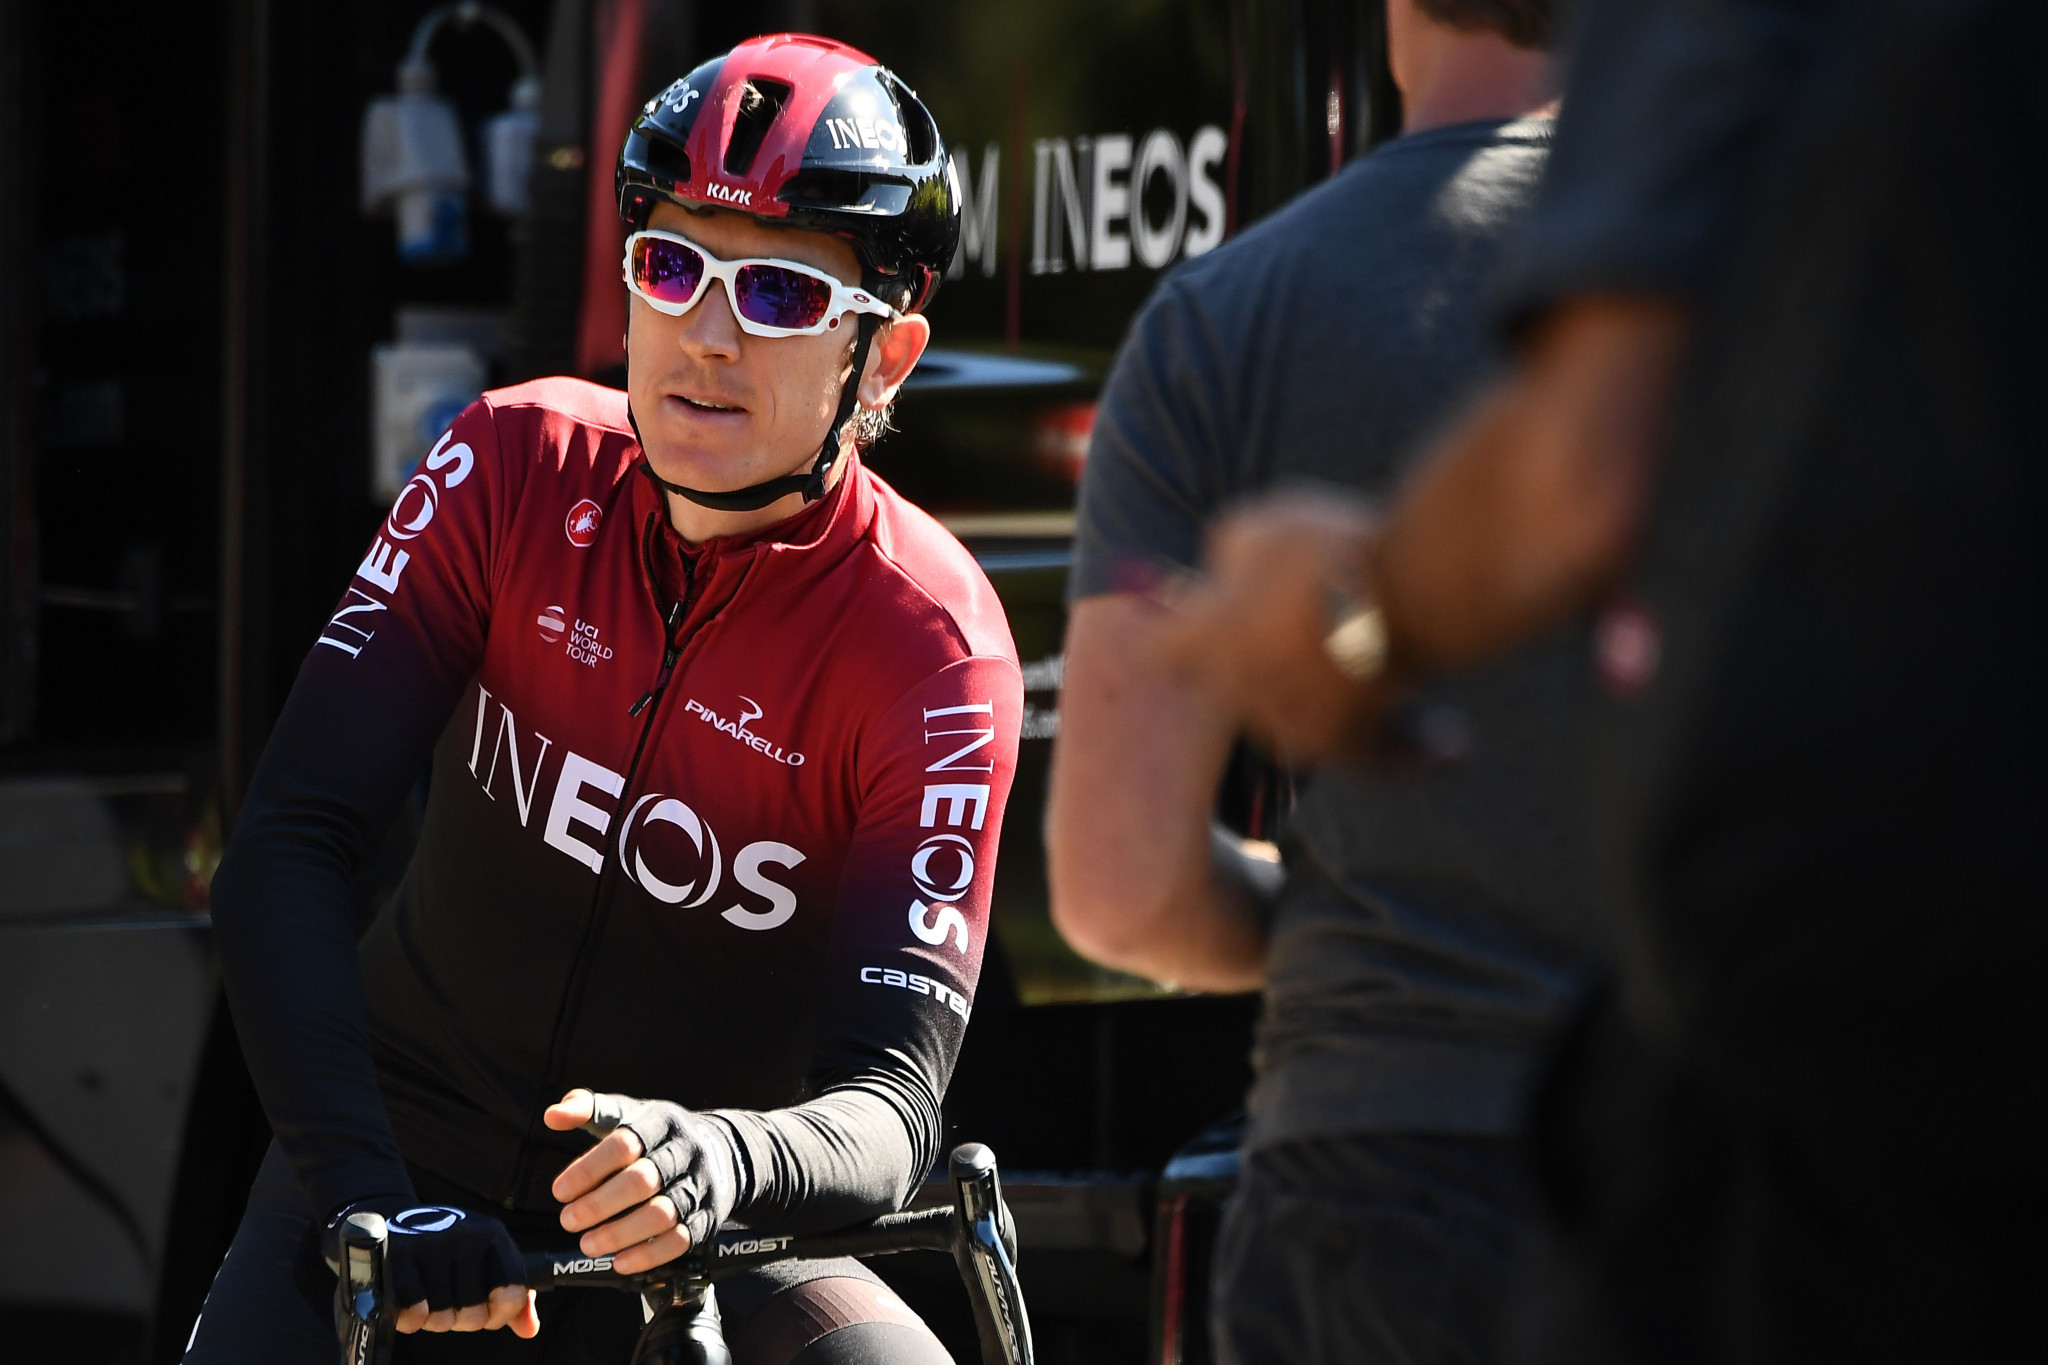 Defending champion Thomas confident in Bernal partnership ahead of Tour de France